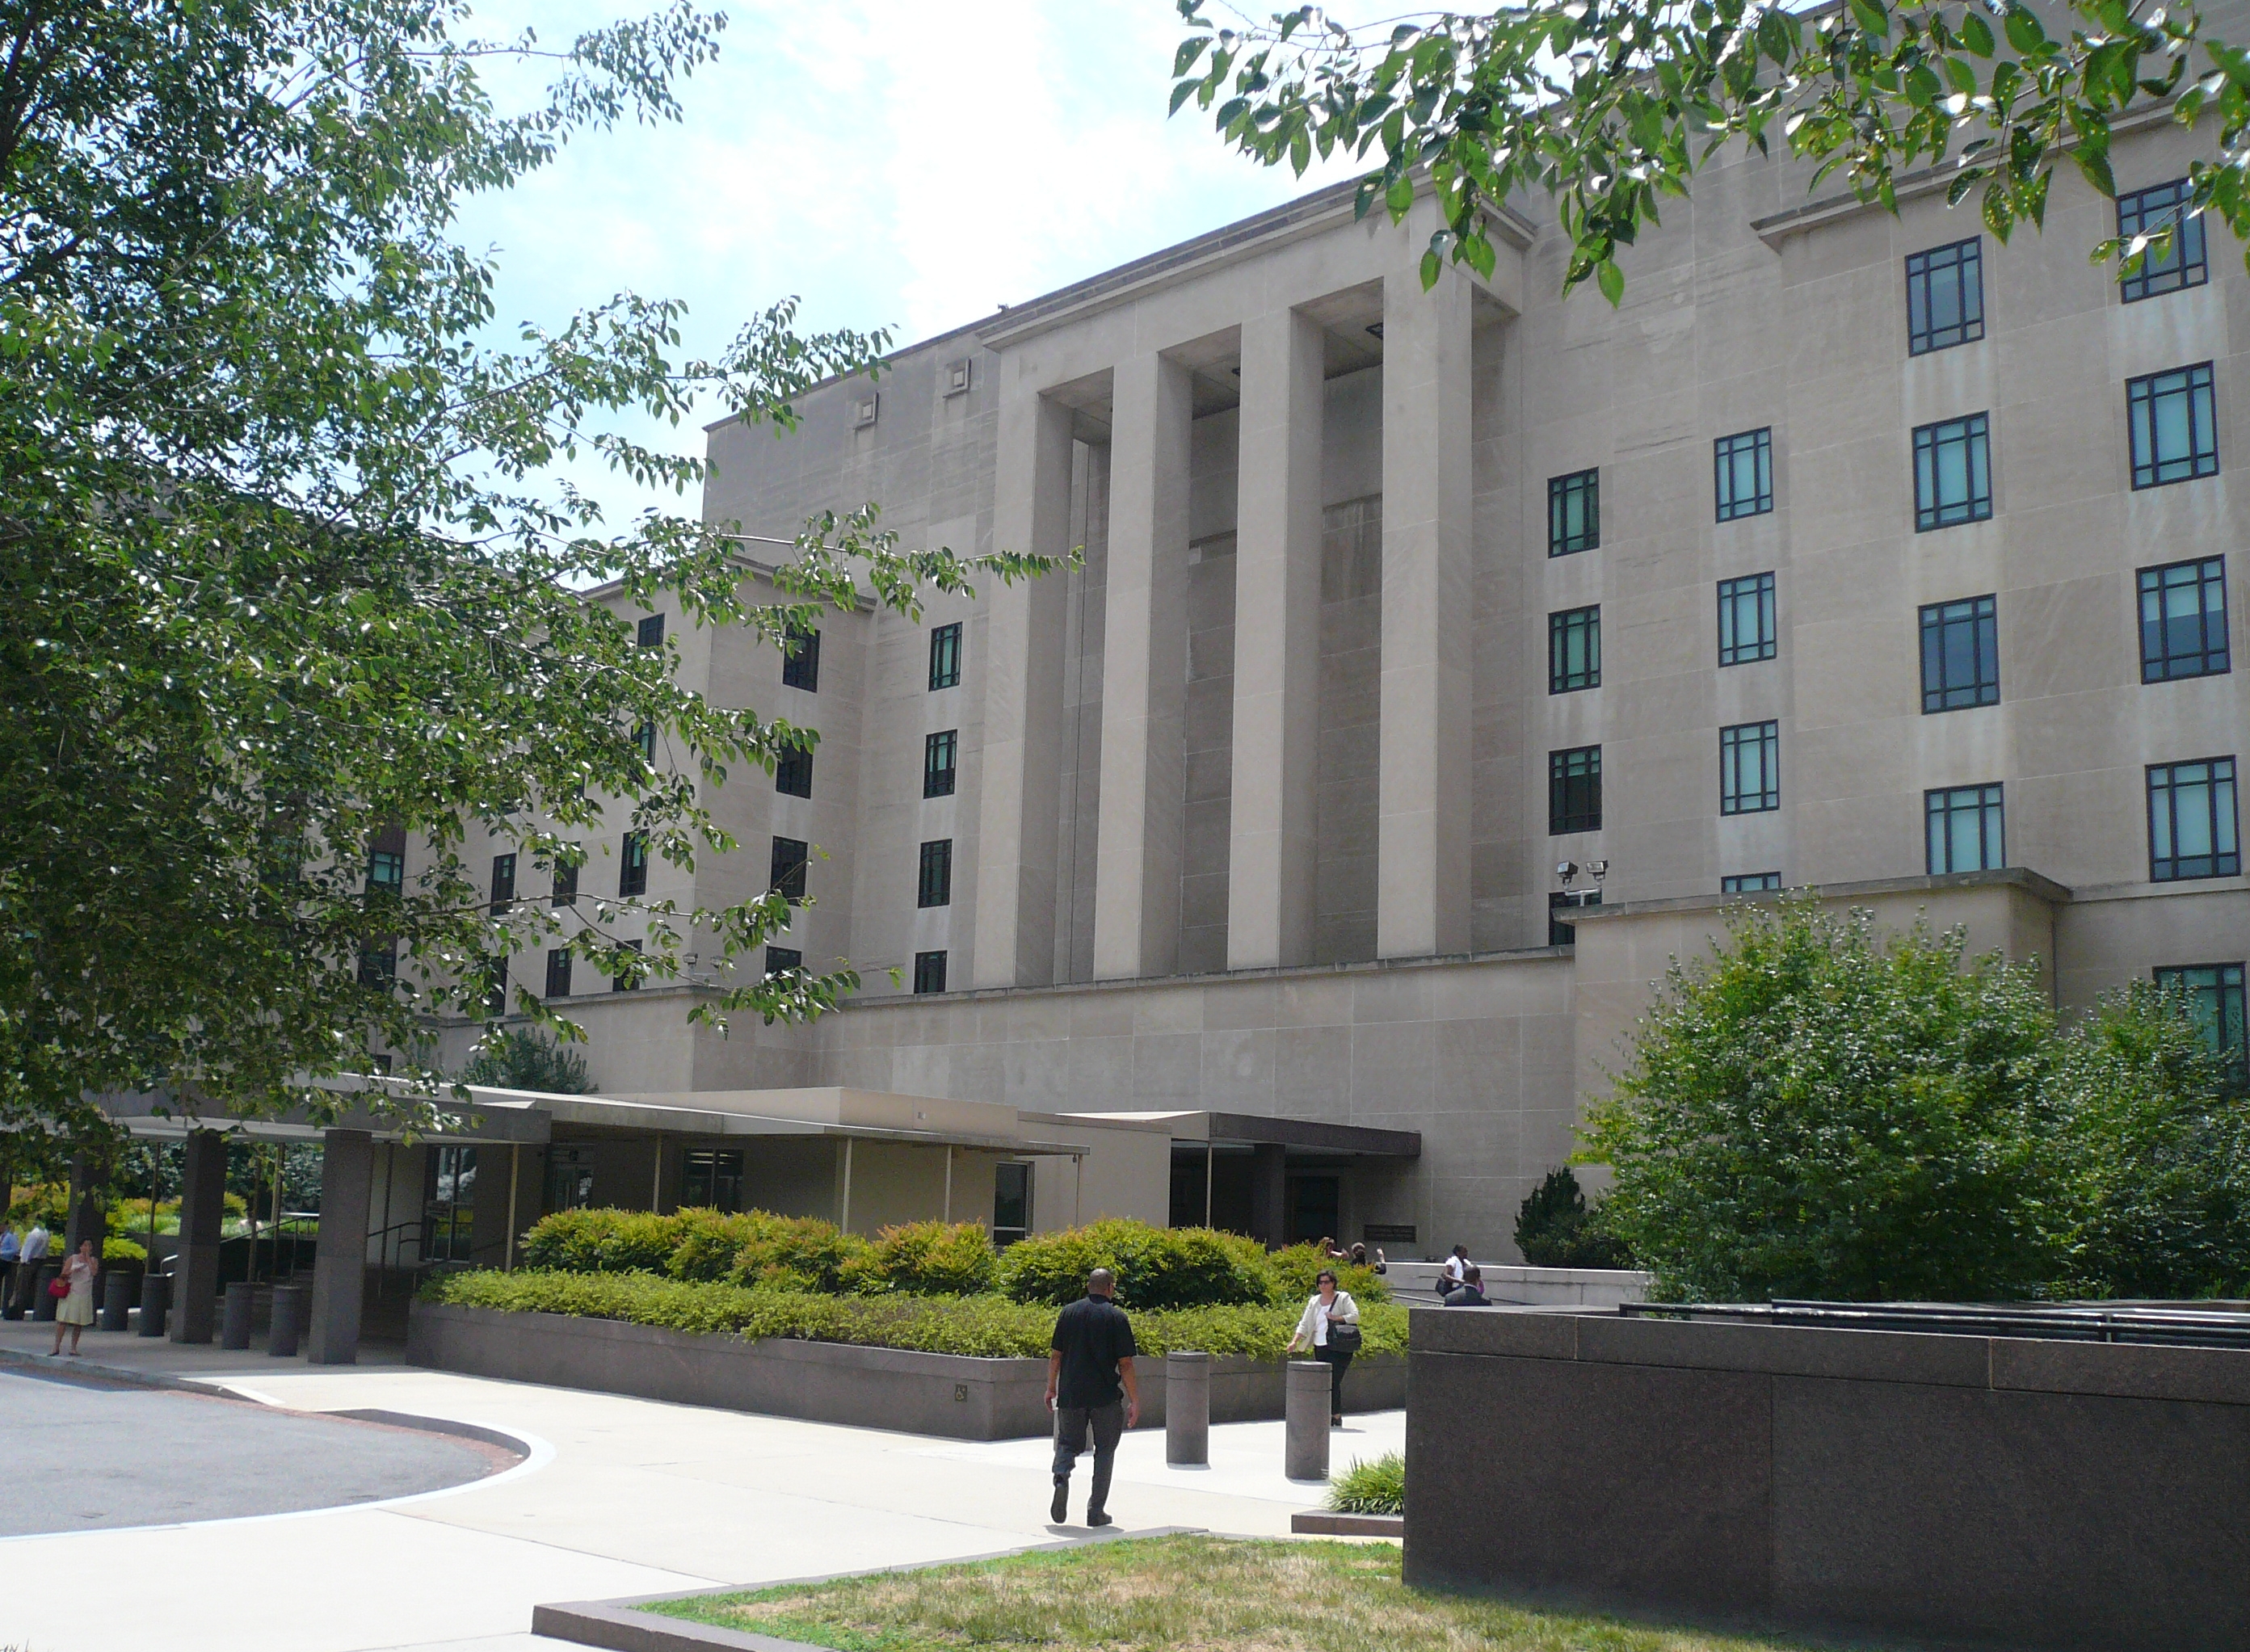 State Department headquarters.